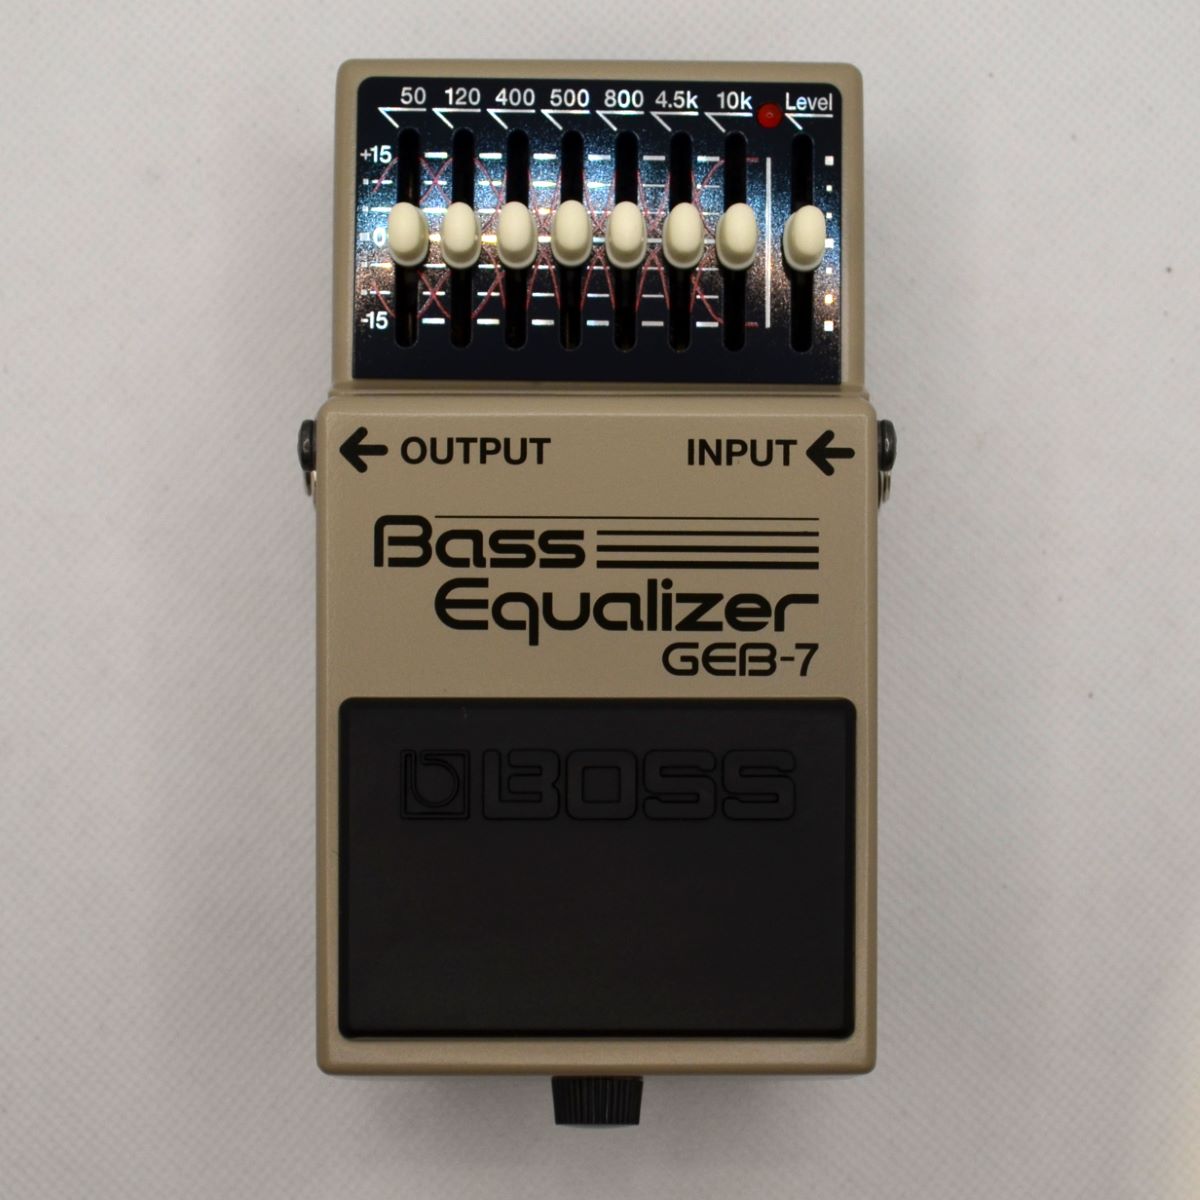 BOSS bass equalizer GEB-7 ベースイコライザー - ベース